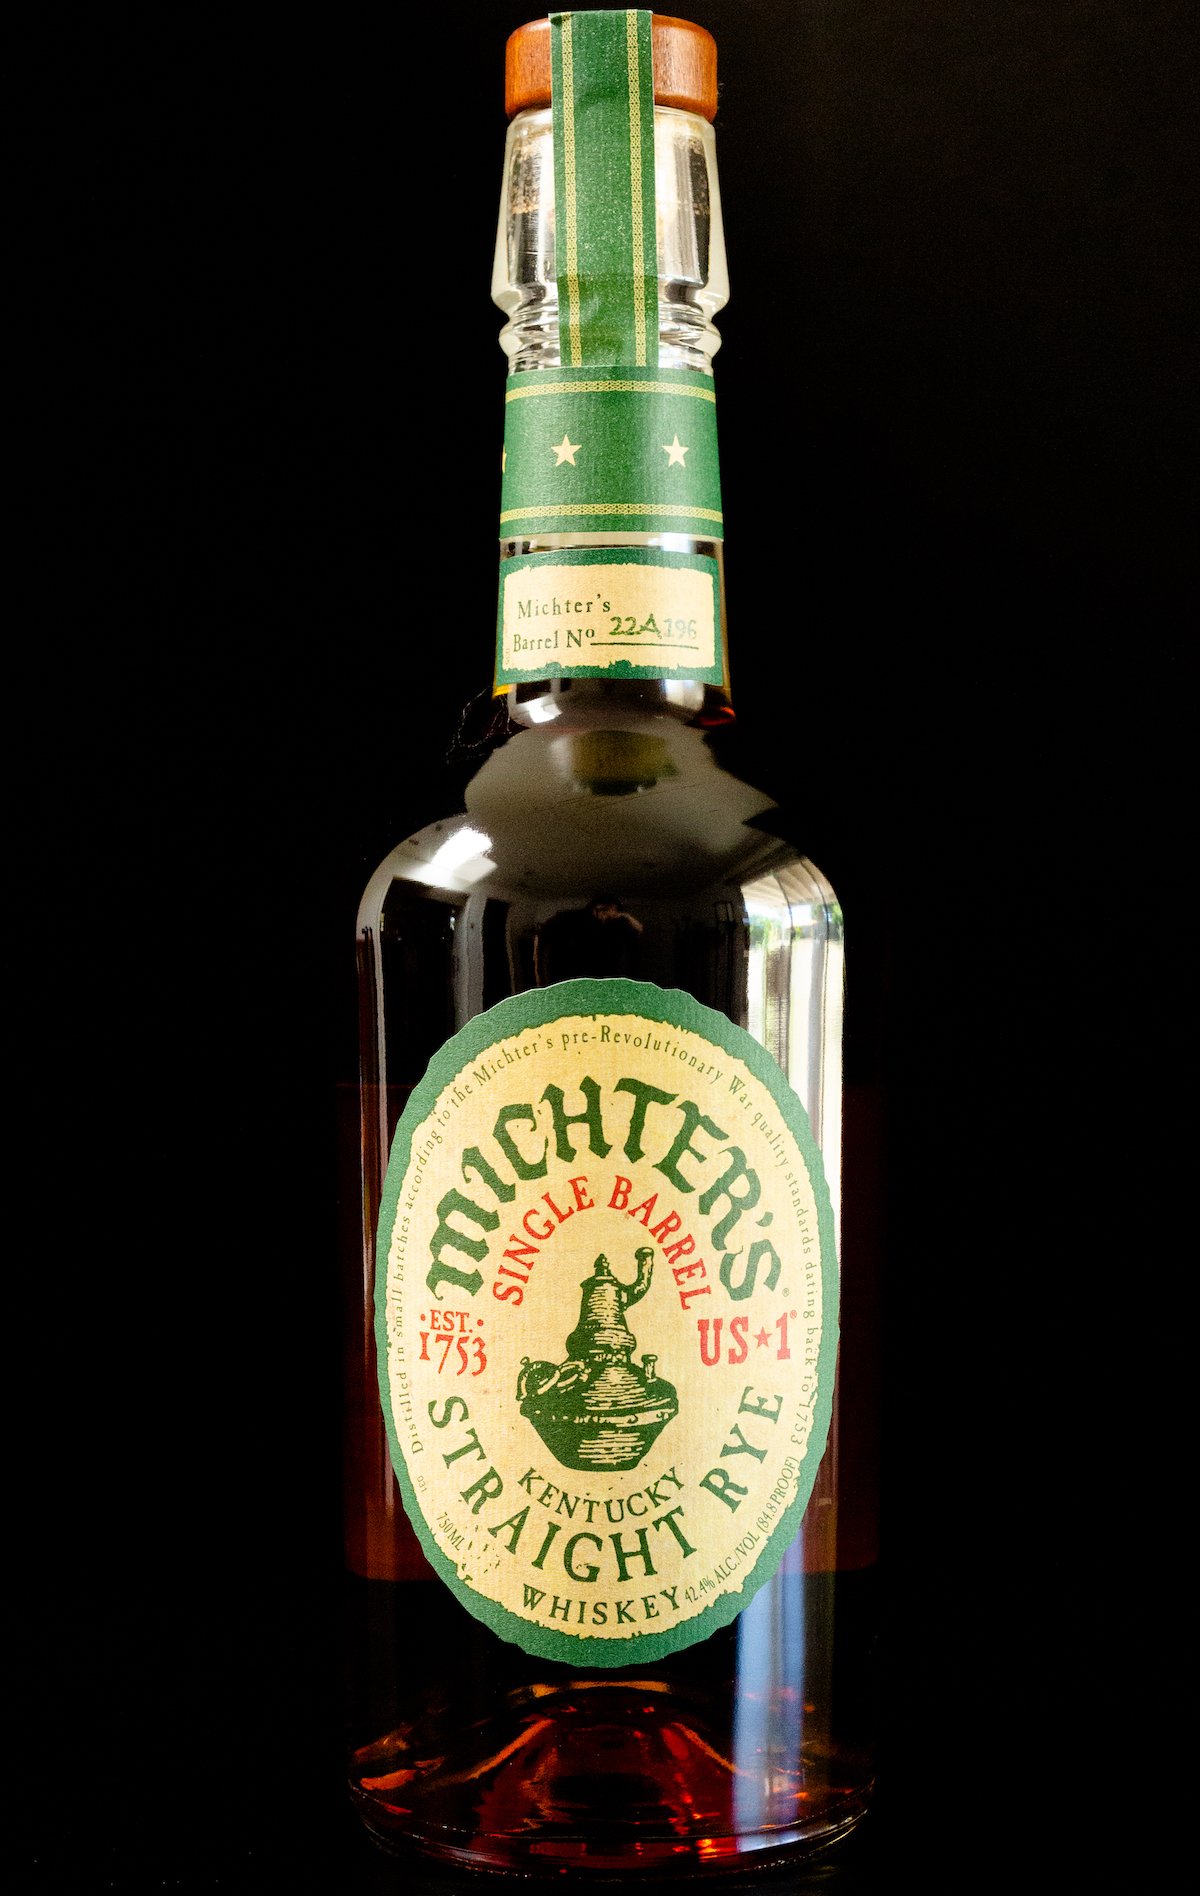 A bottle of Michter's Single Barrel Straight Rye Whiskey on a black background.